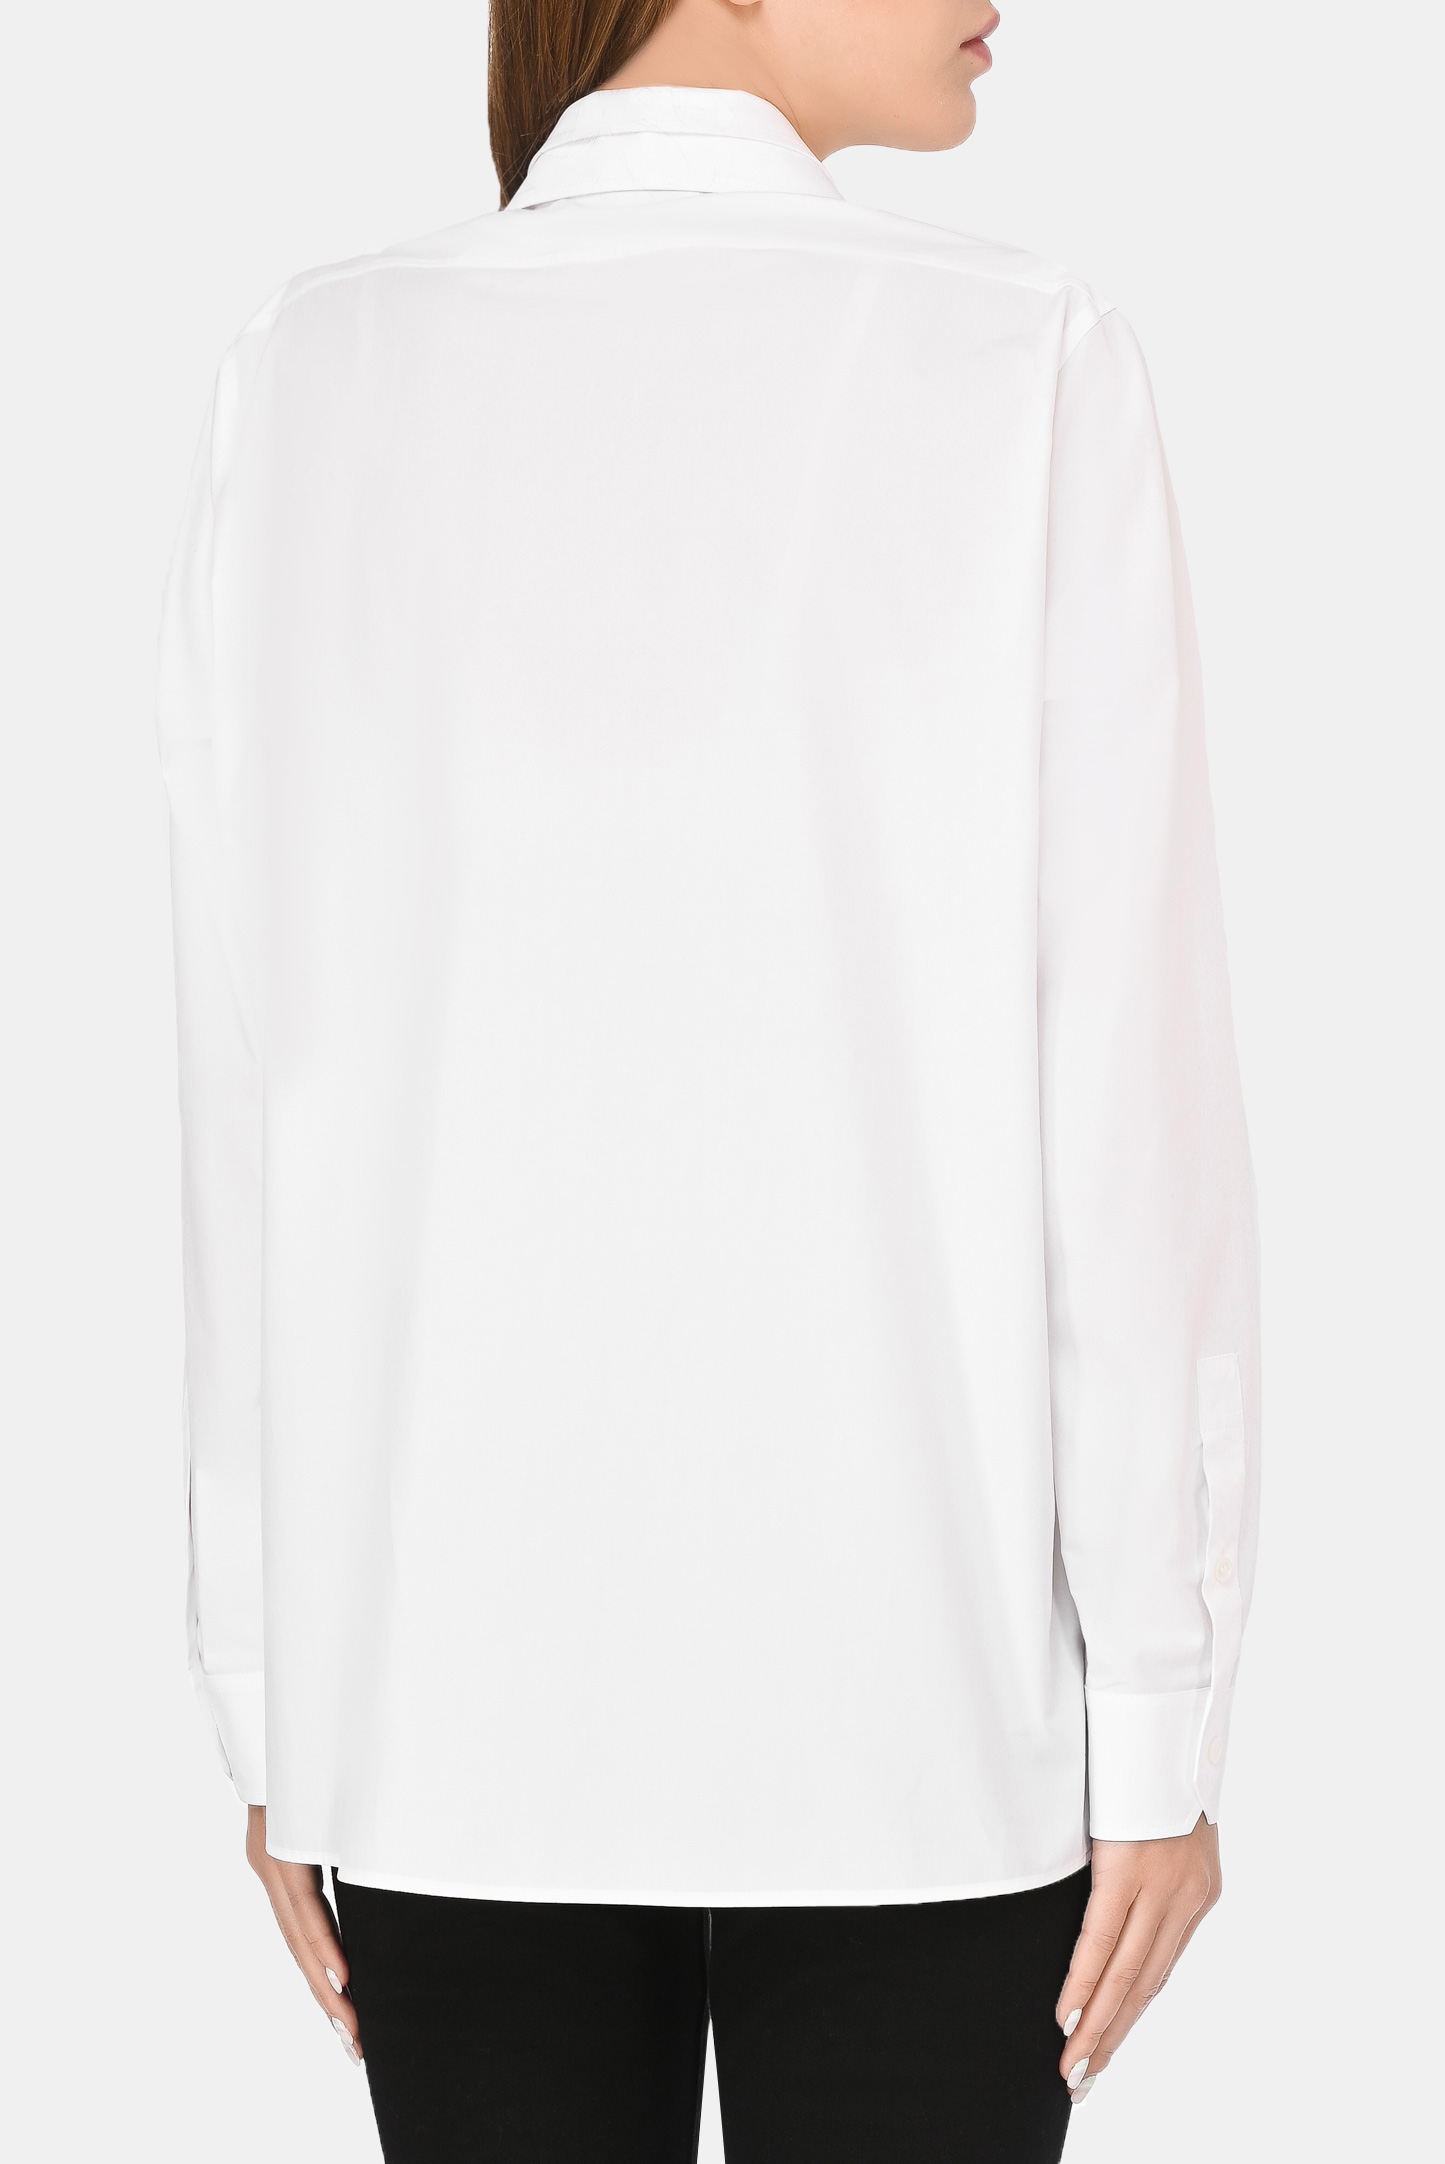 Рубашка VALENTINO PAP WB0AB2X55A6, цвет: Белый, Женский